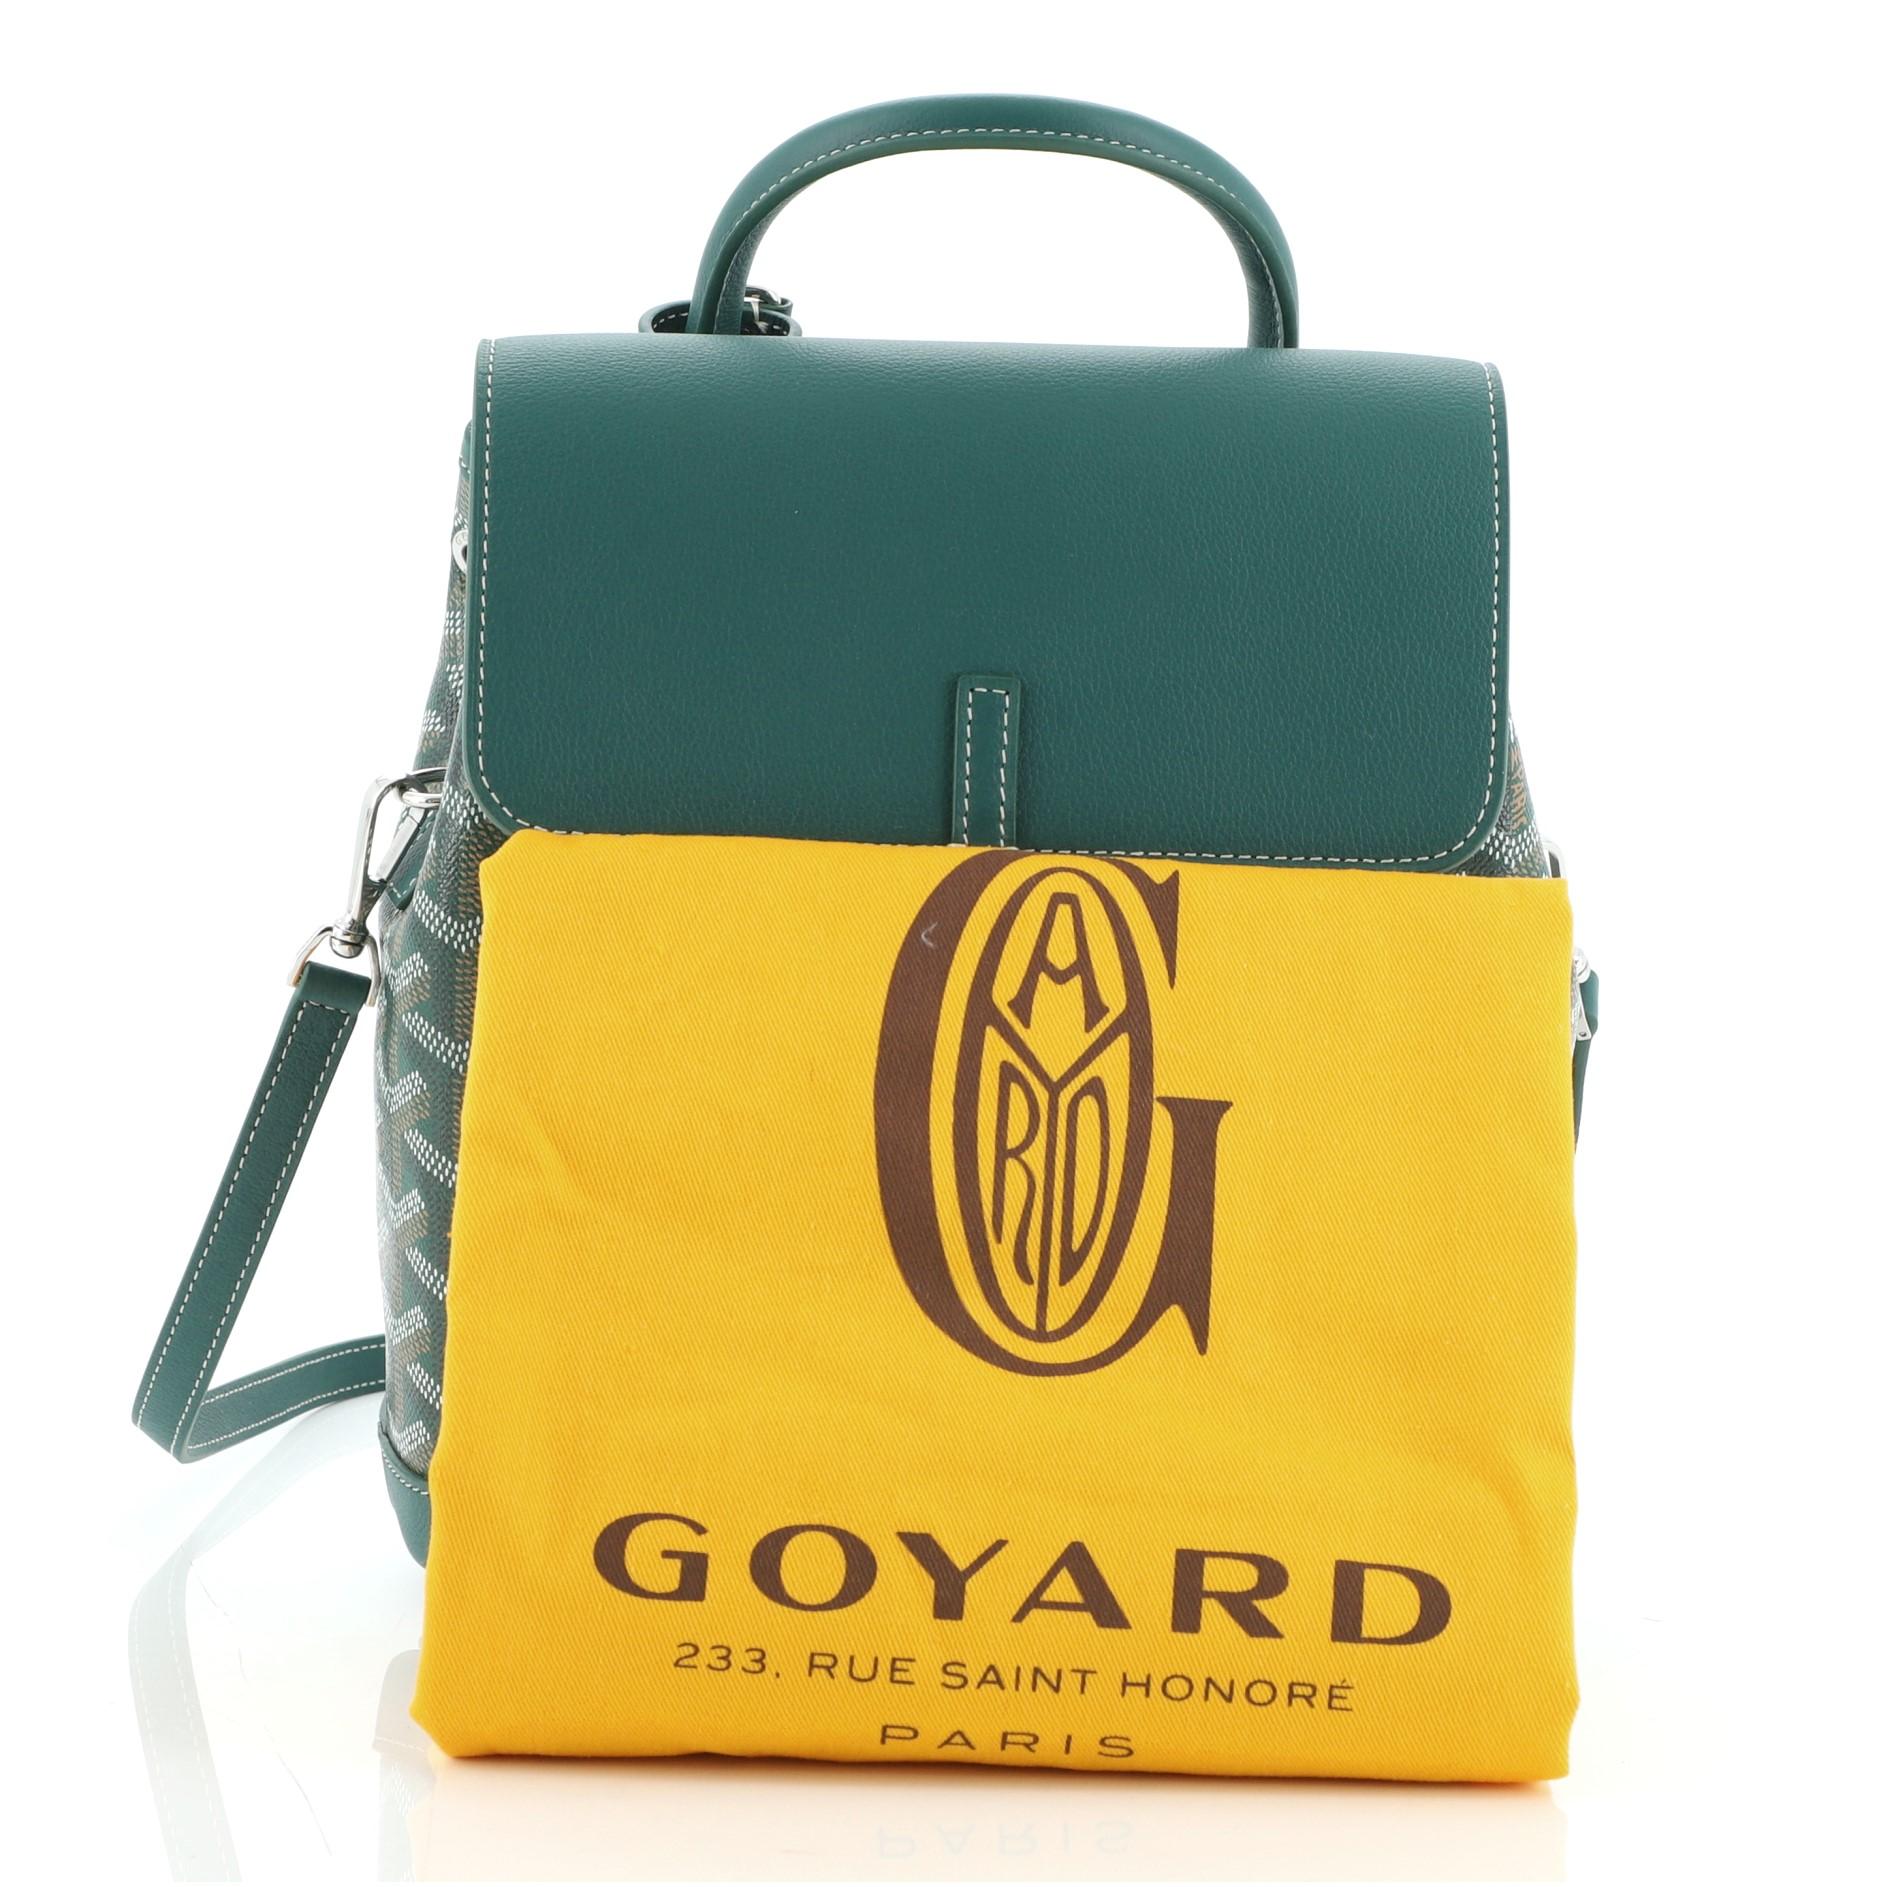 Goyard Alpin - For Sale on 1stDibs